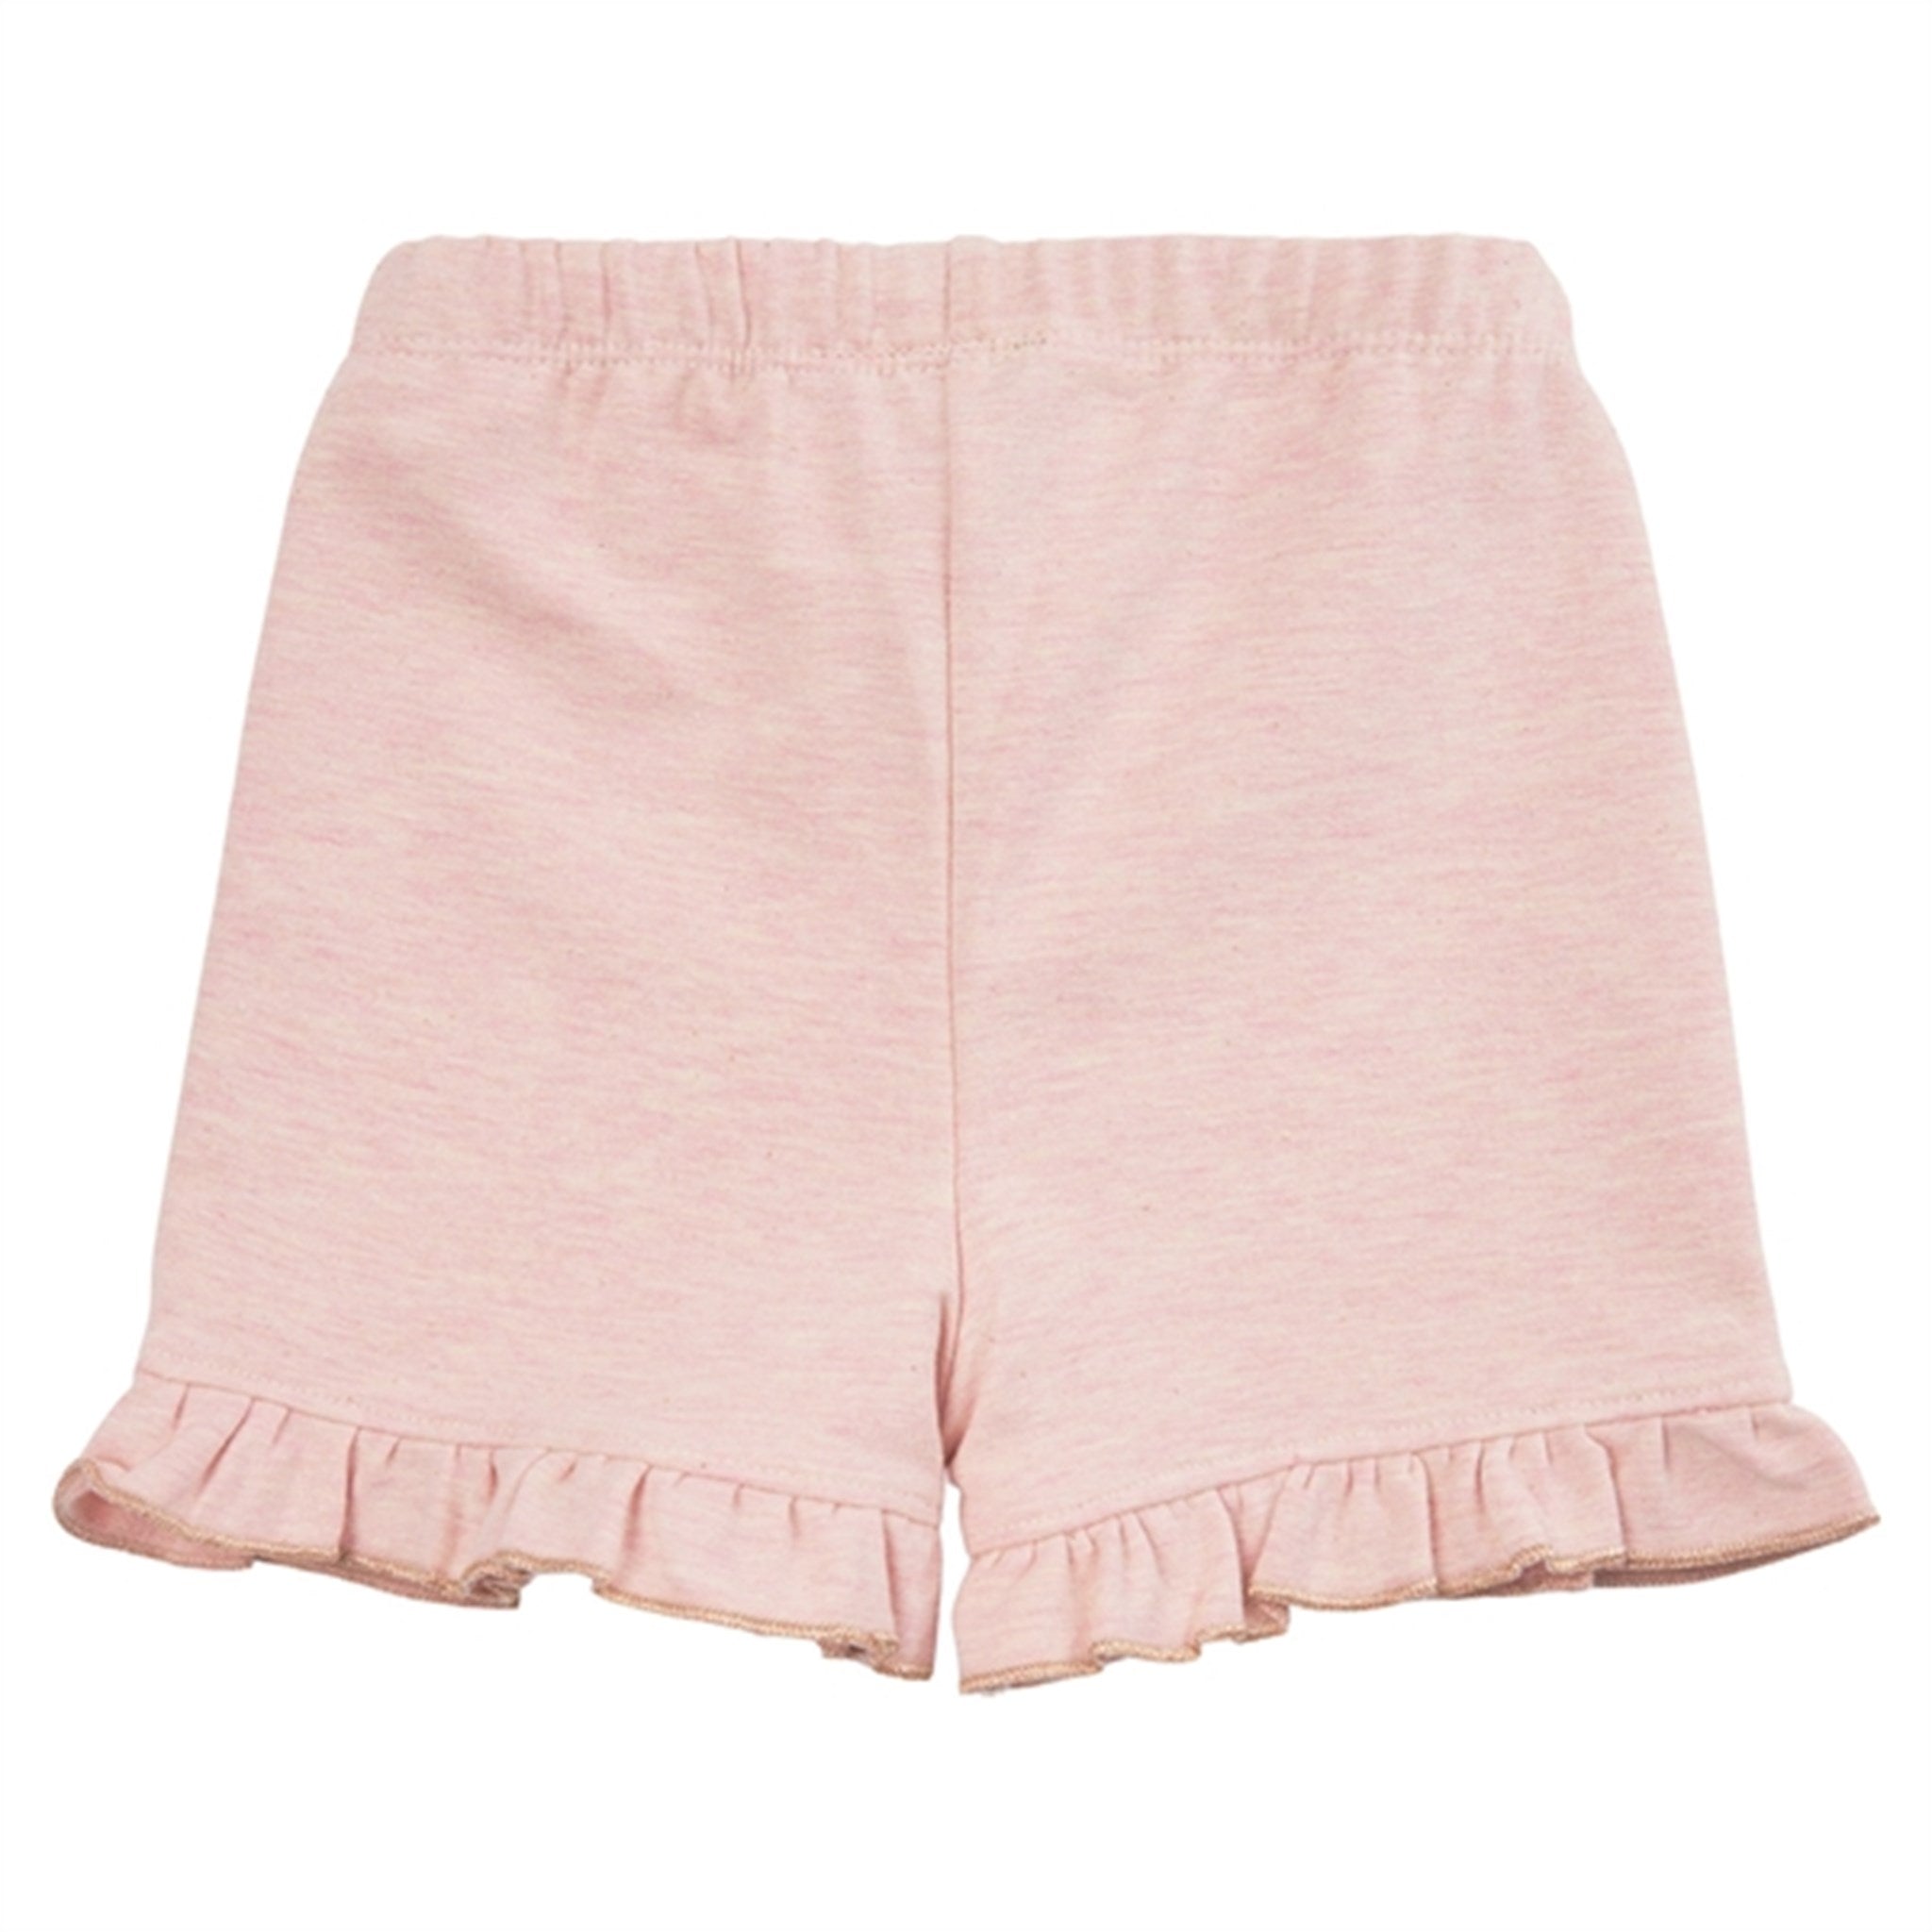 Sofie Schnoor Rose Blush Shorts 2